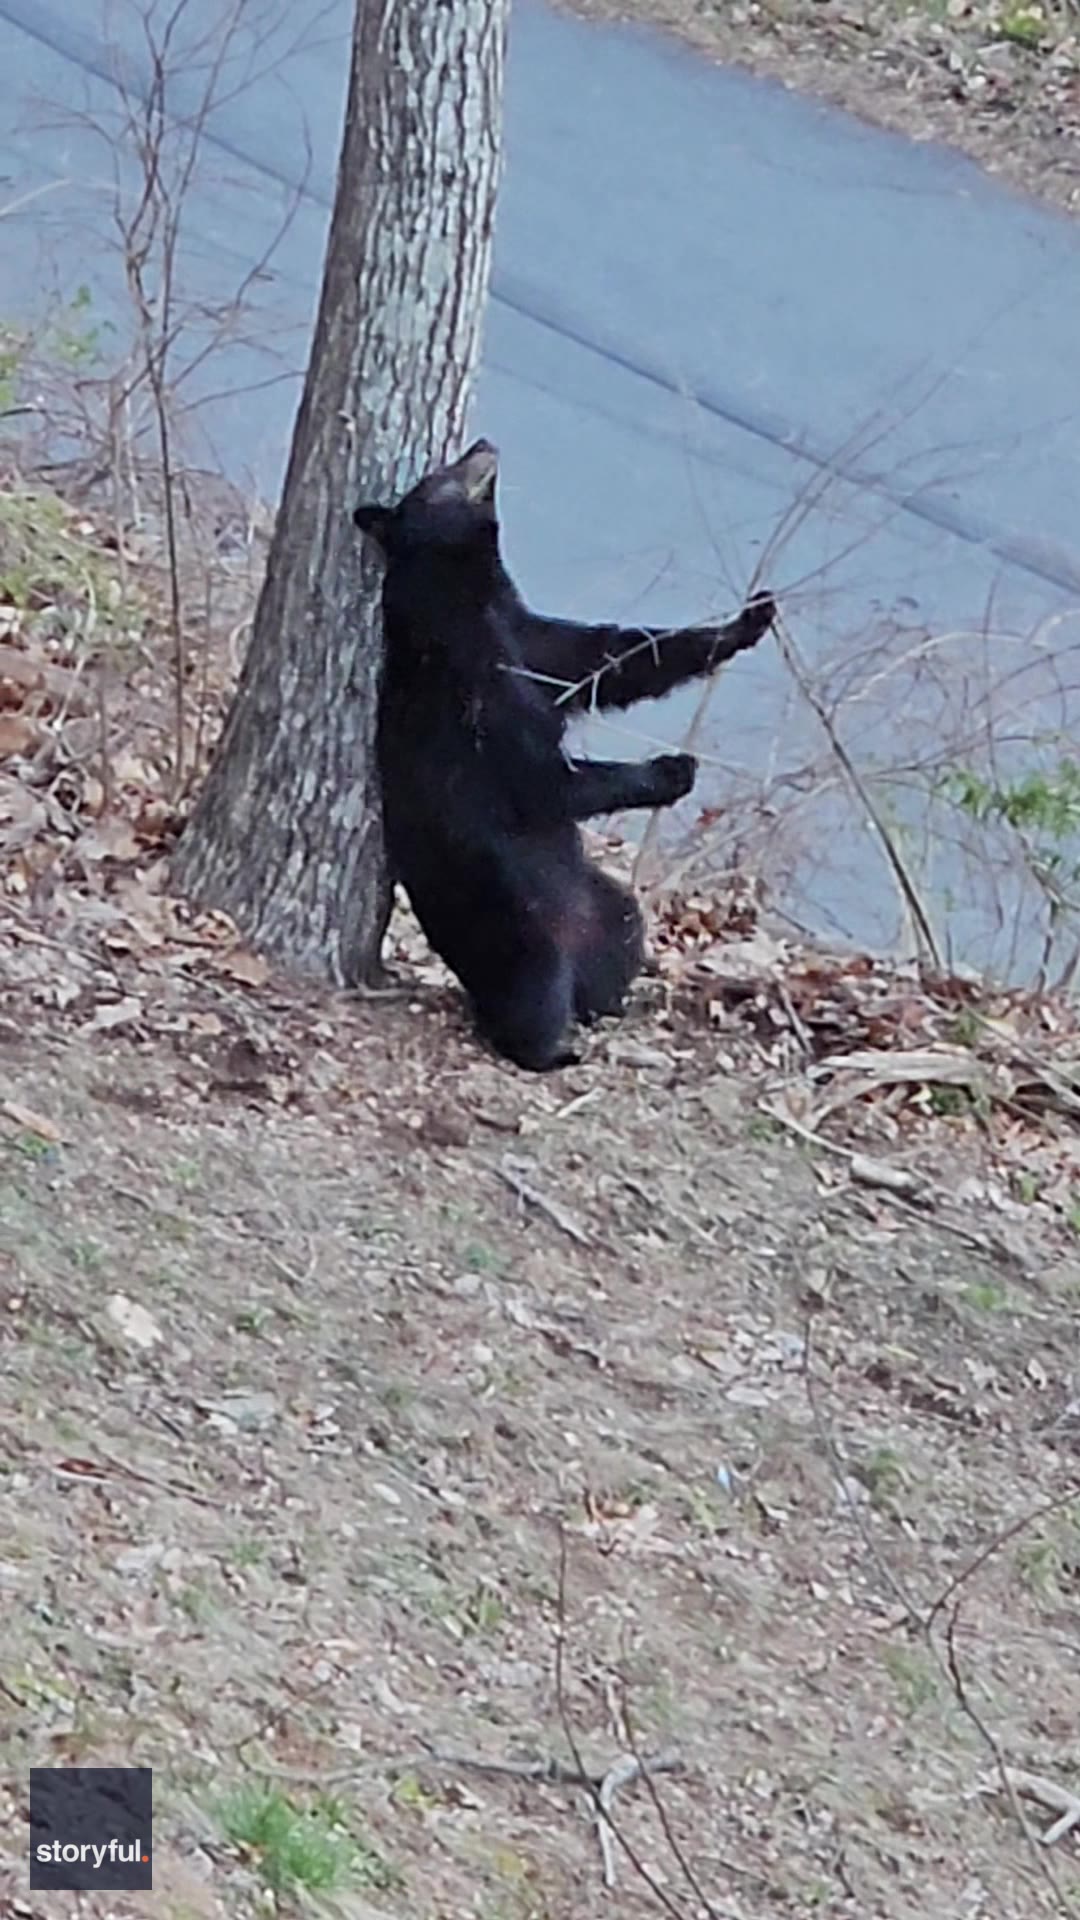 Bear scratches itself on tree